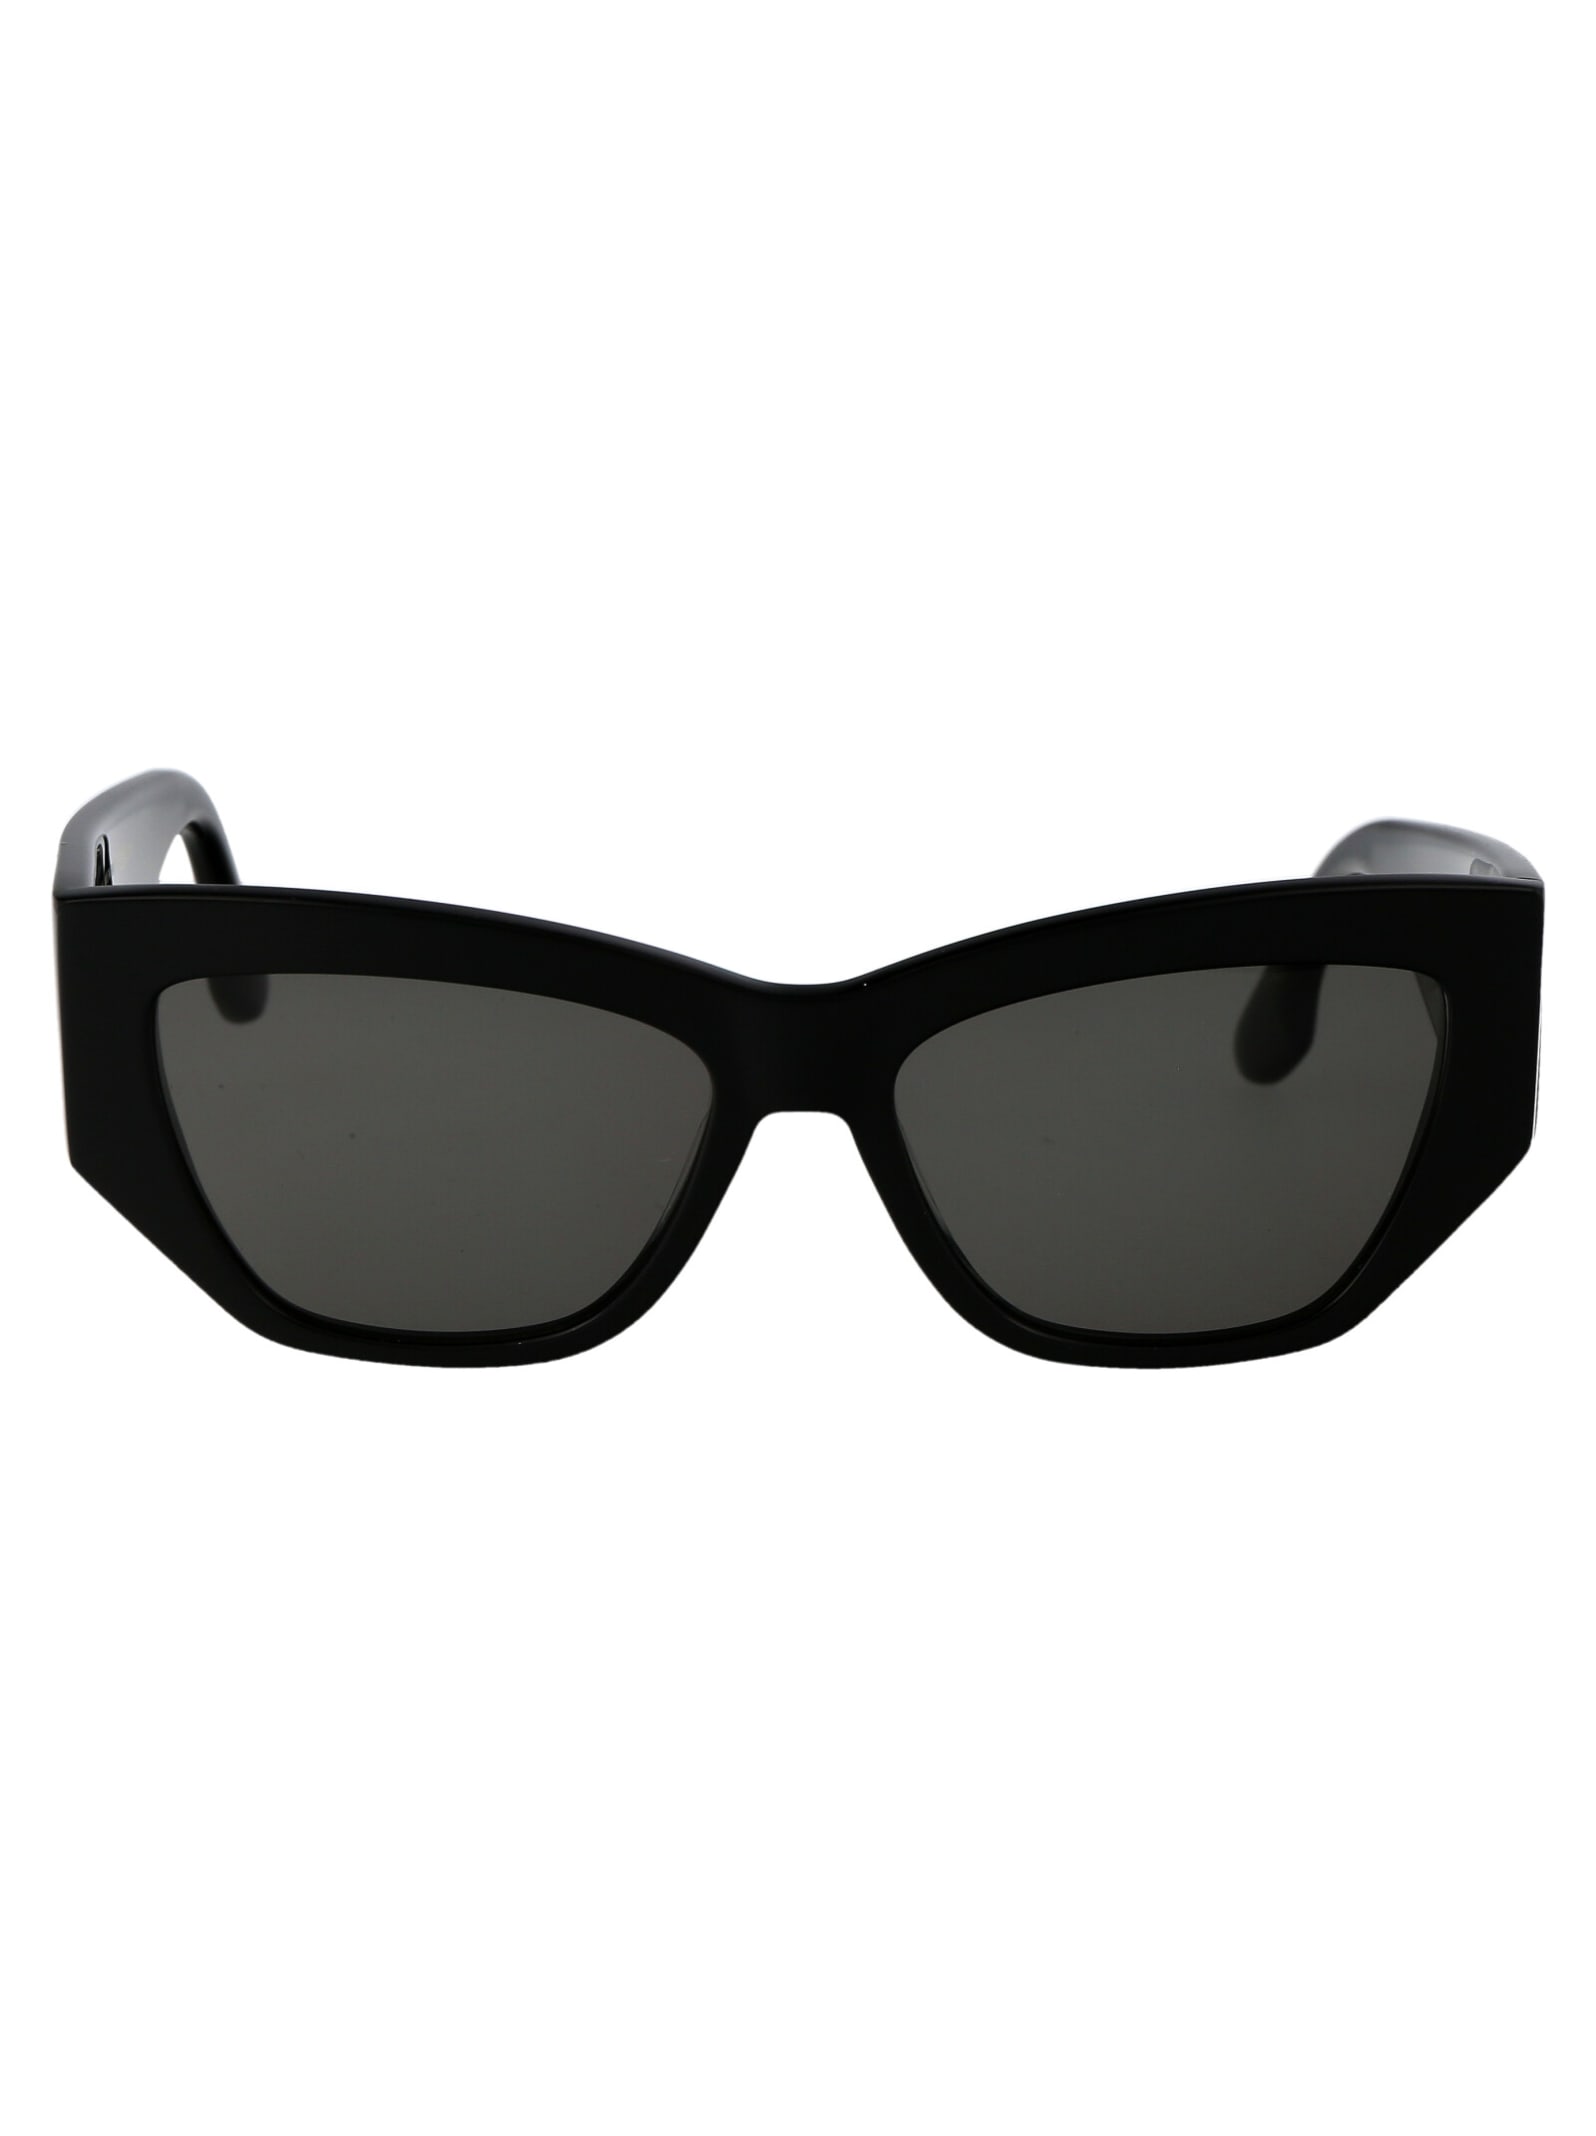 Vb645s Sunglasses